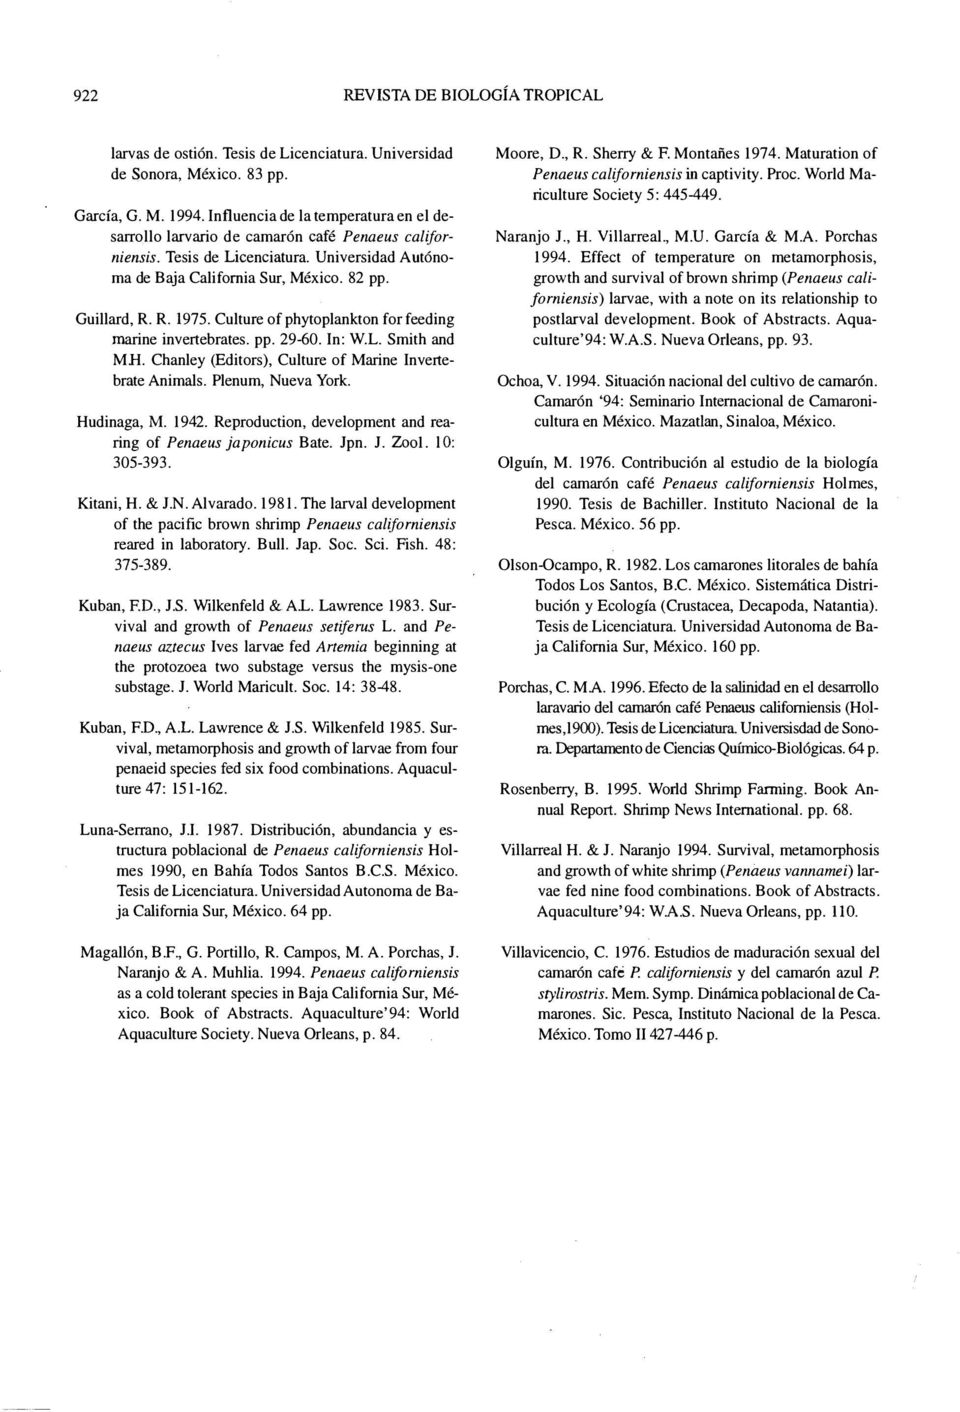 Culture of phytoplankton for feeding marine invertebrates. pp. 29-60. In: W.L. Smith and M.H. Chanley (Editors), Culture of Marine Invertebrate Animals. Plenum, Nueva York. '\ Hudinaga, M. 1942.